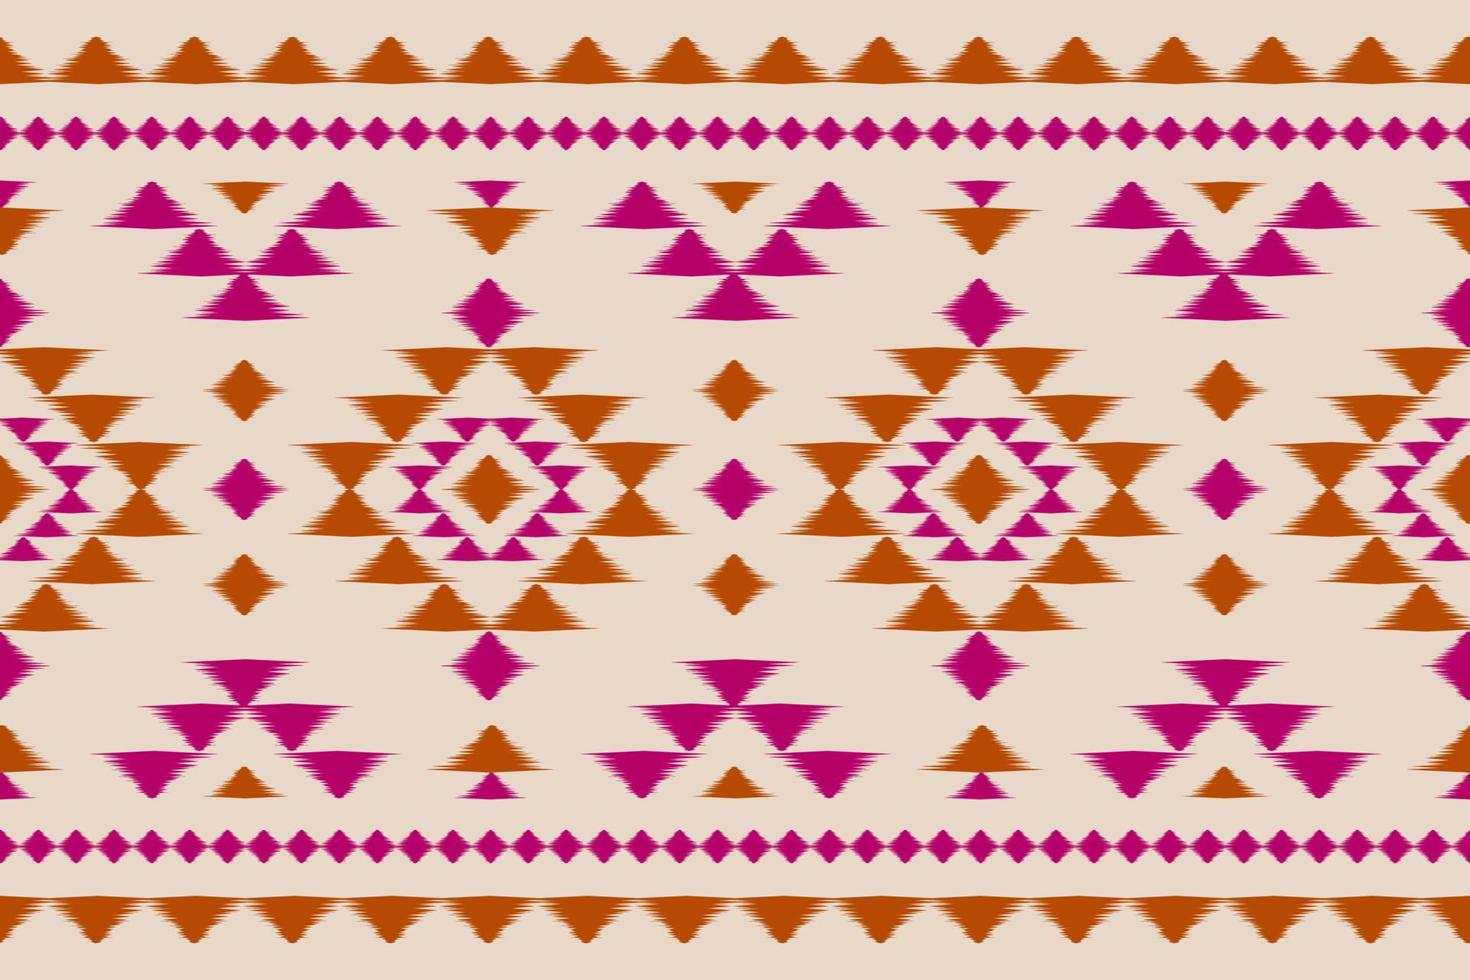 matta etnisk ikat mönster konst. geometrisk etnisk ikat sömlös mönster i stam. mexikansk stil. vektor